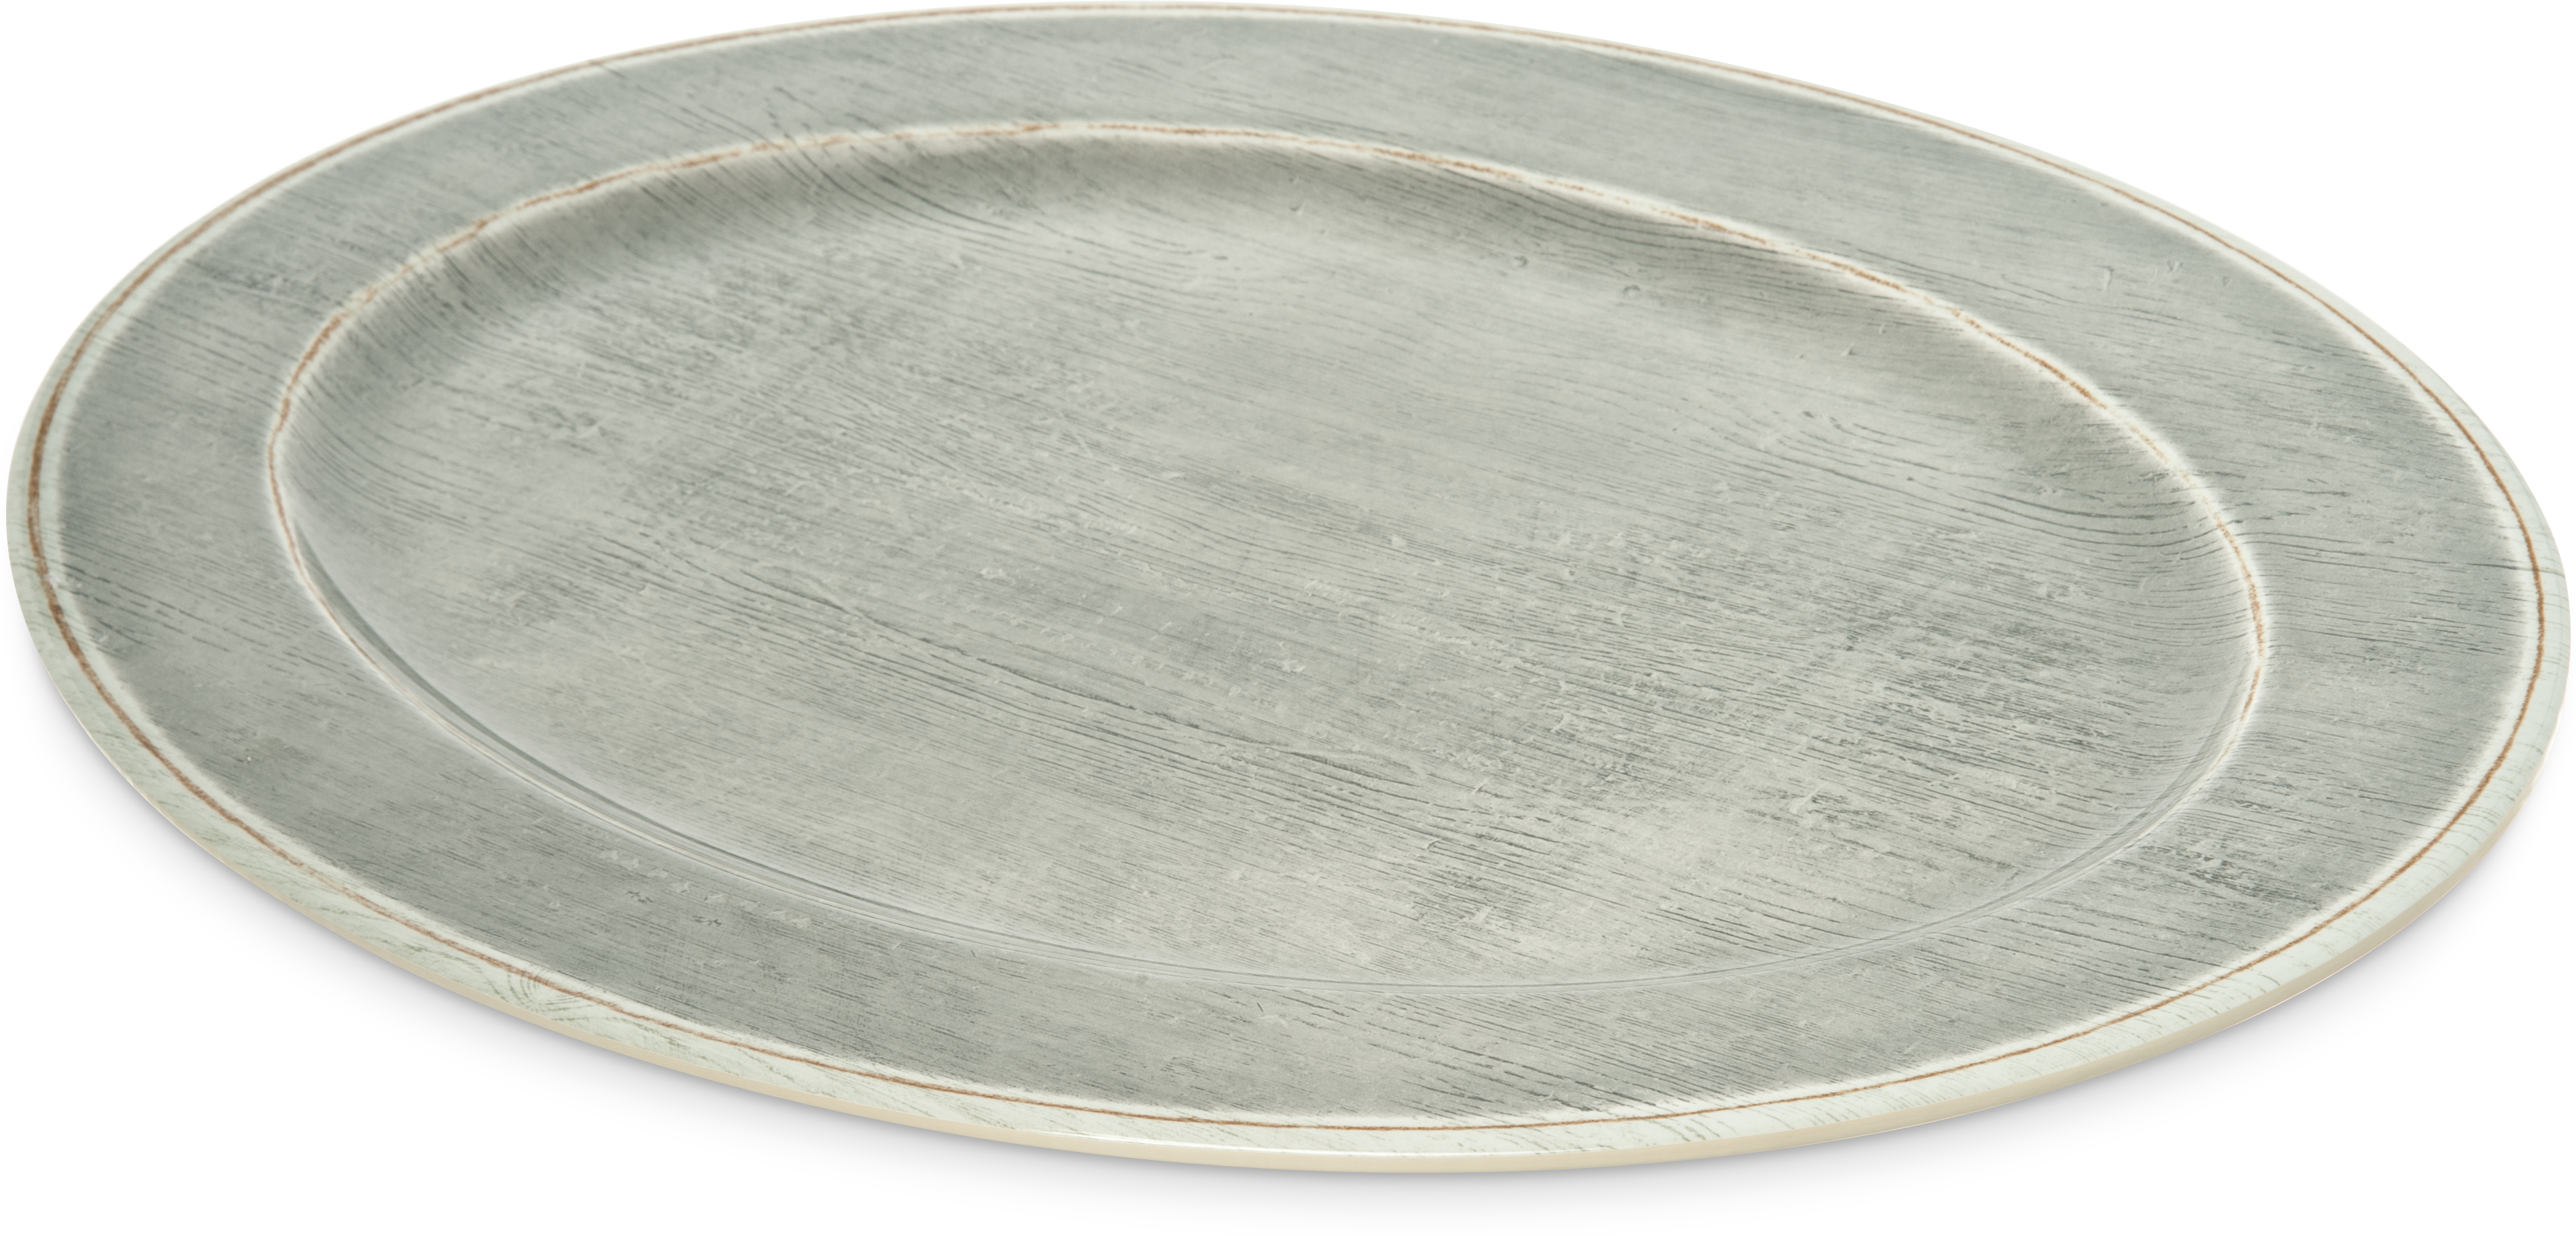 Melamine Oval Platter Tray 20 x 14 - Smoke